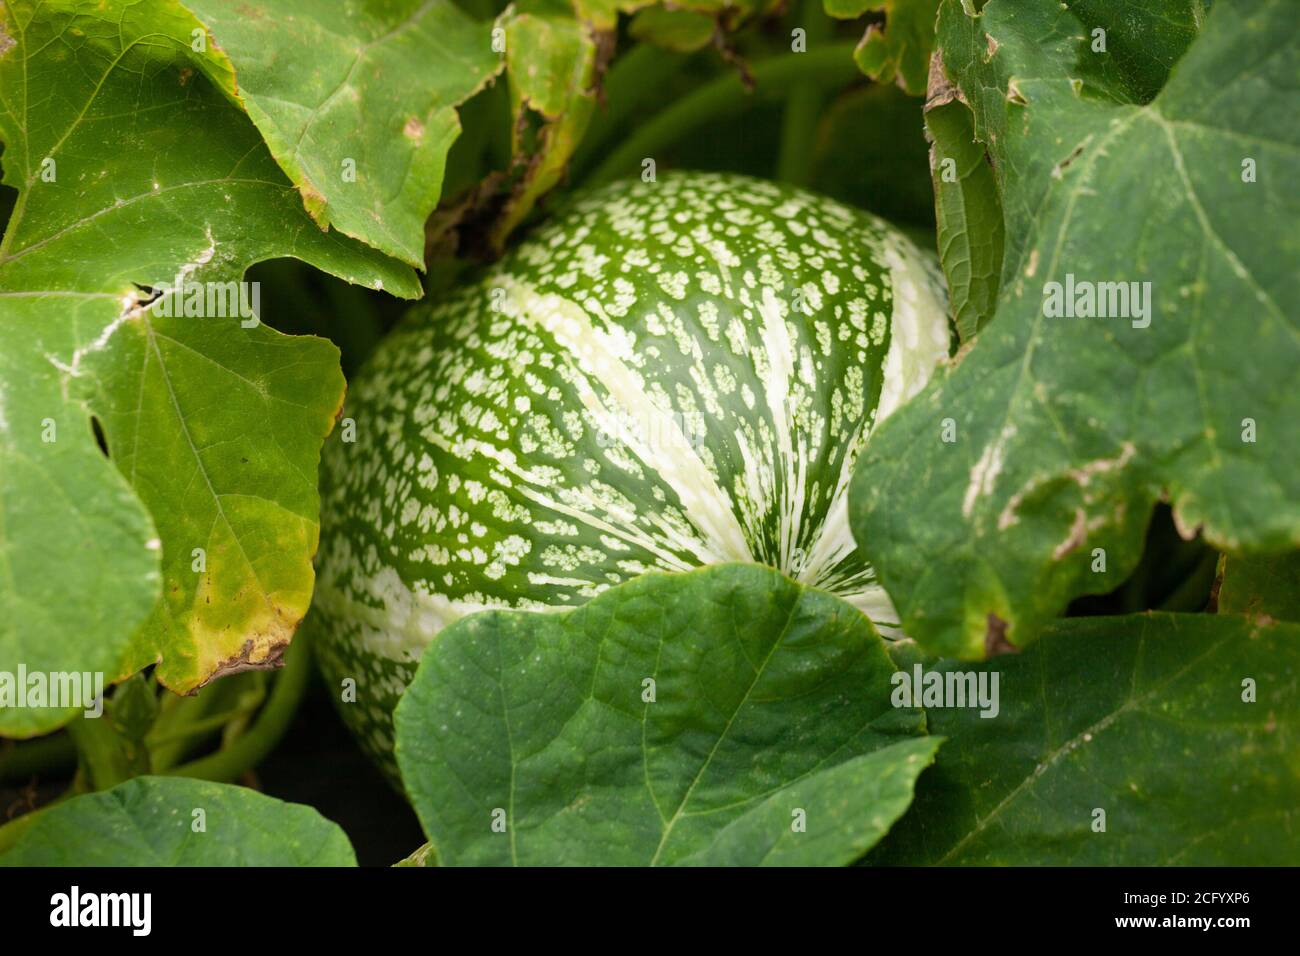 View of Shark Fin Melon / Cucurbita ficifolia / Gardening /Healthy eating / Sustainable Living concept Stock Photo